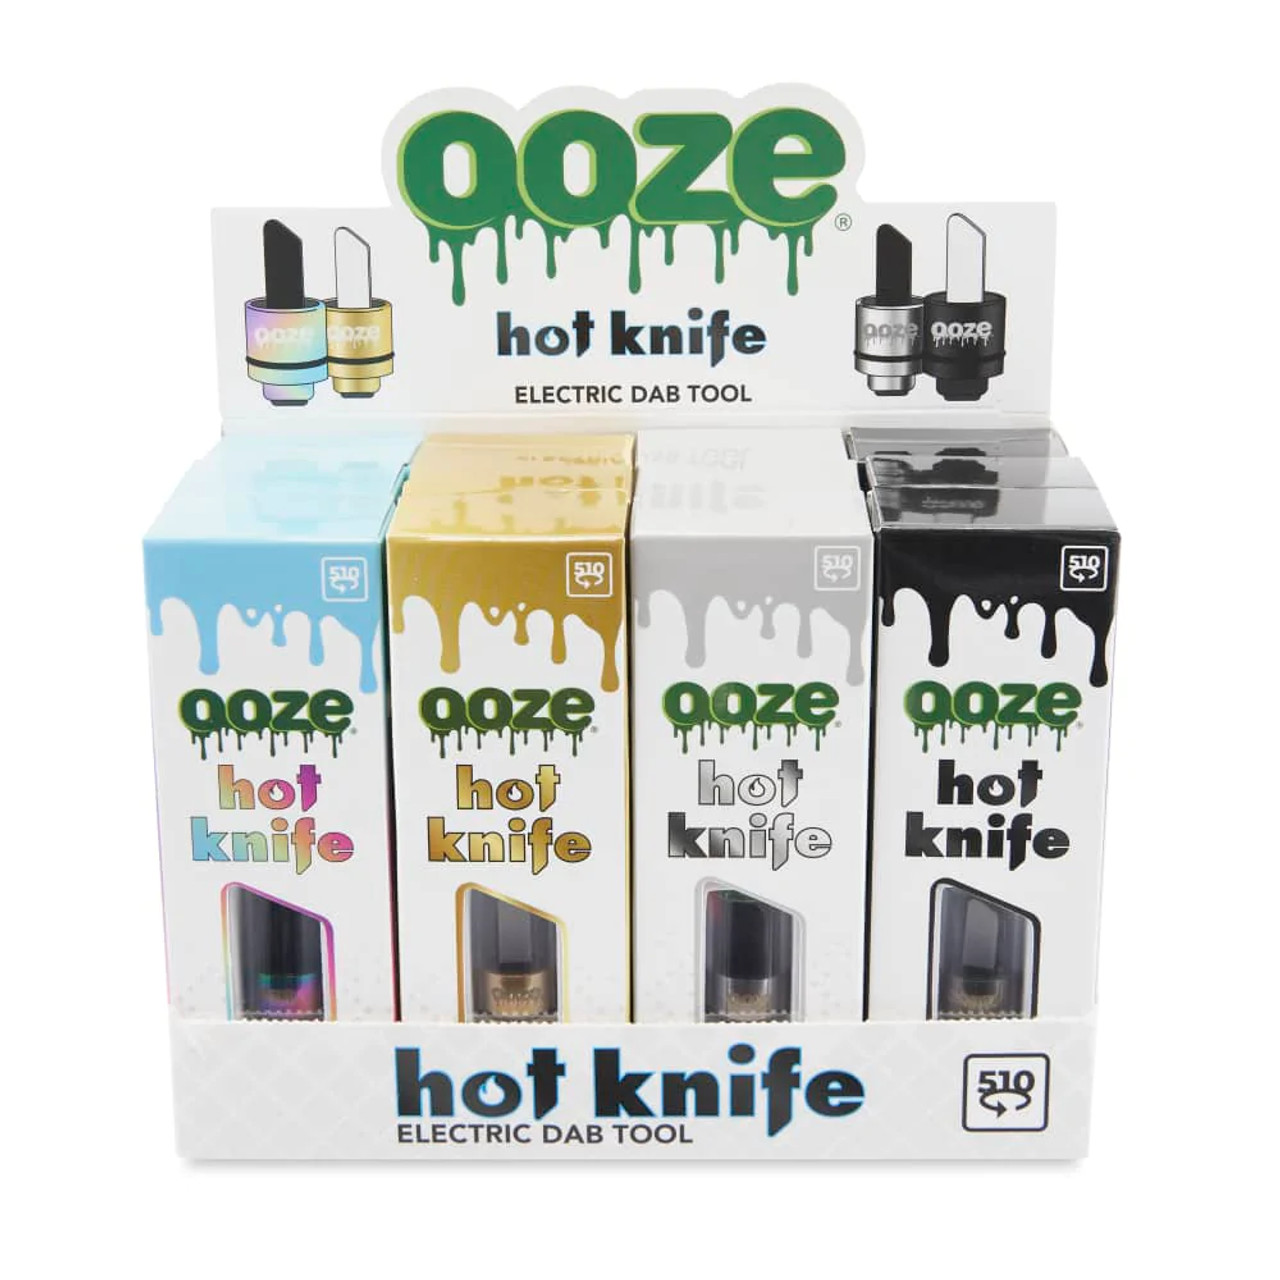 Ooze Twist Hot Knife  Electronic Heated Dabber Tool